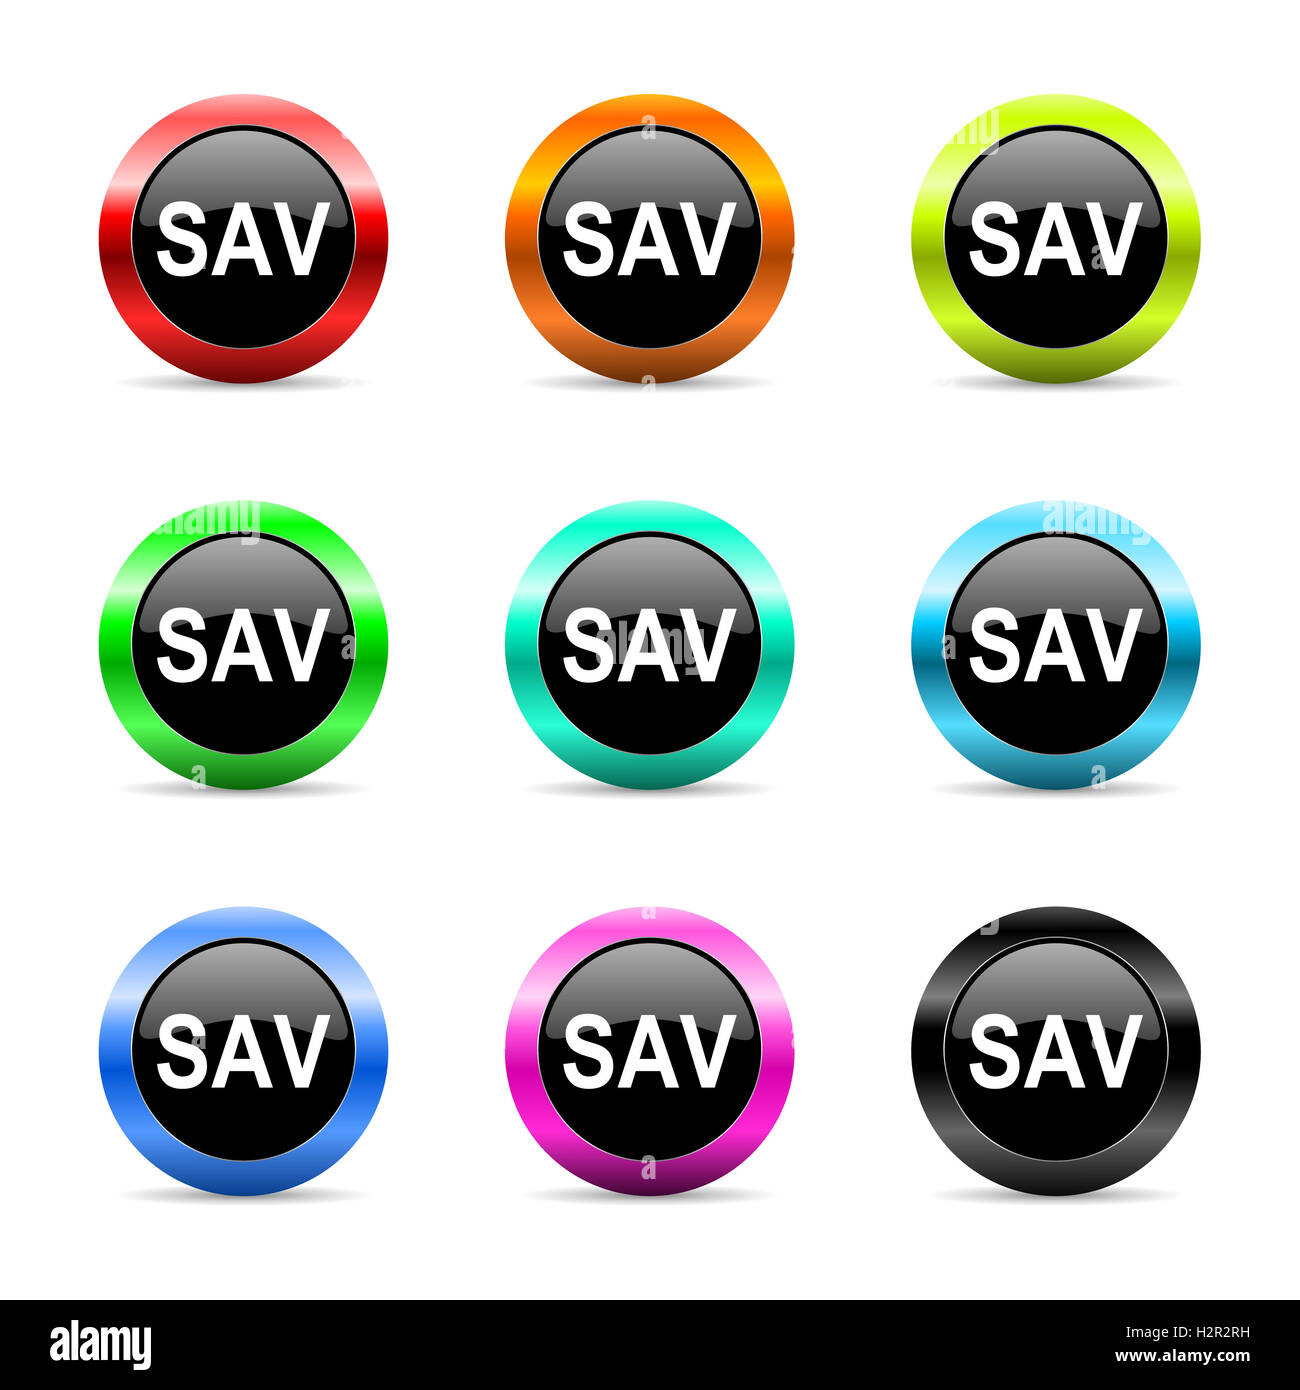 sav web icons set Stock Photo